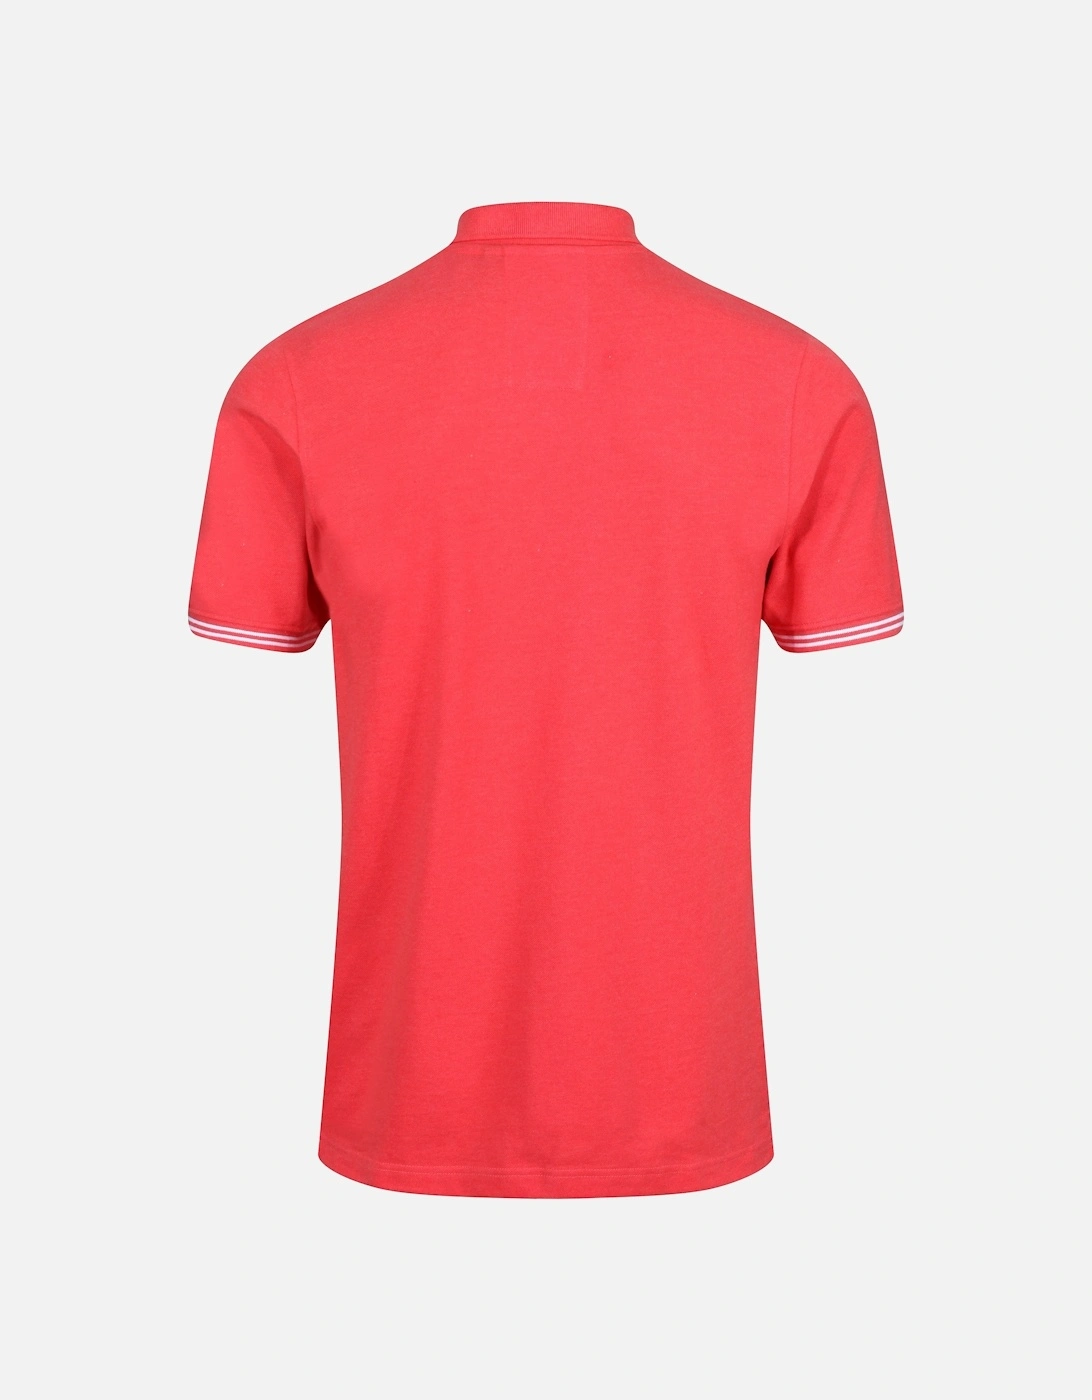 New Mead Polo Shirt | Marl Speach